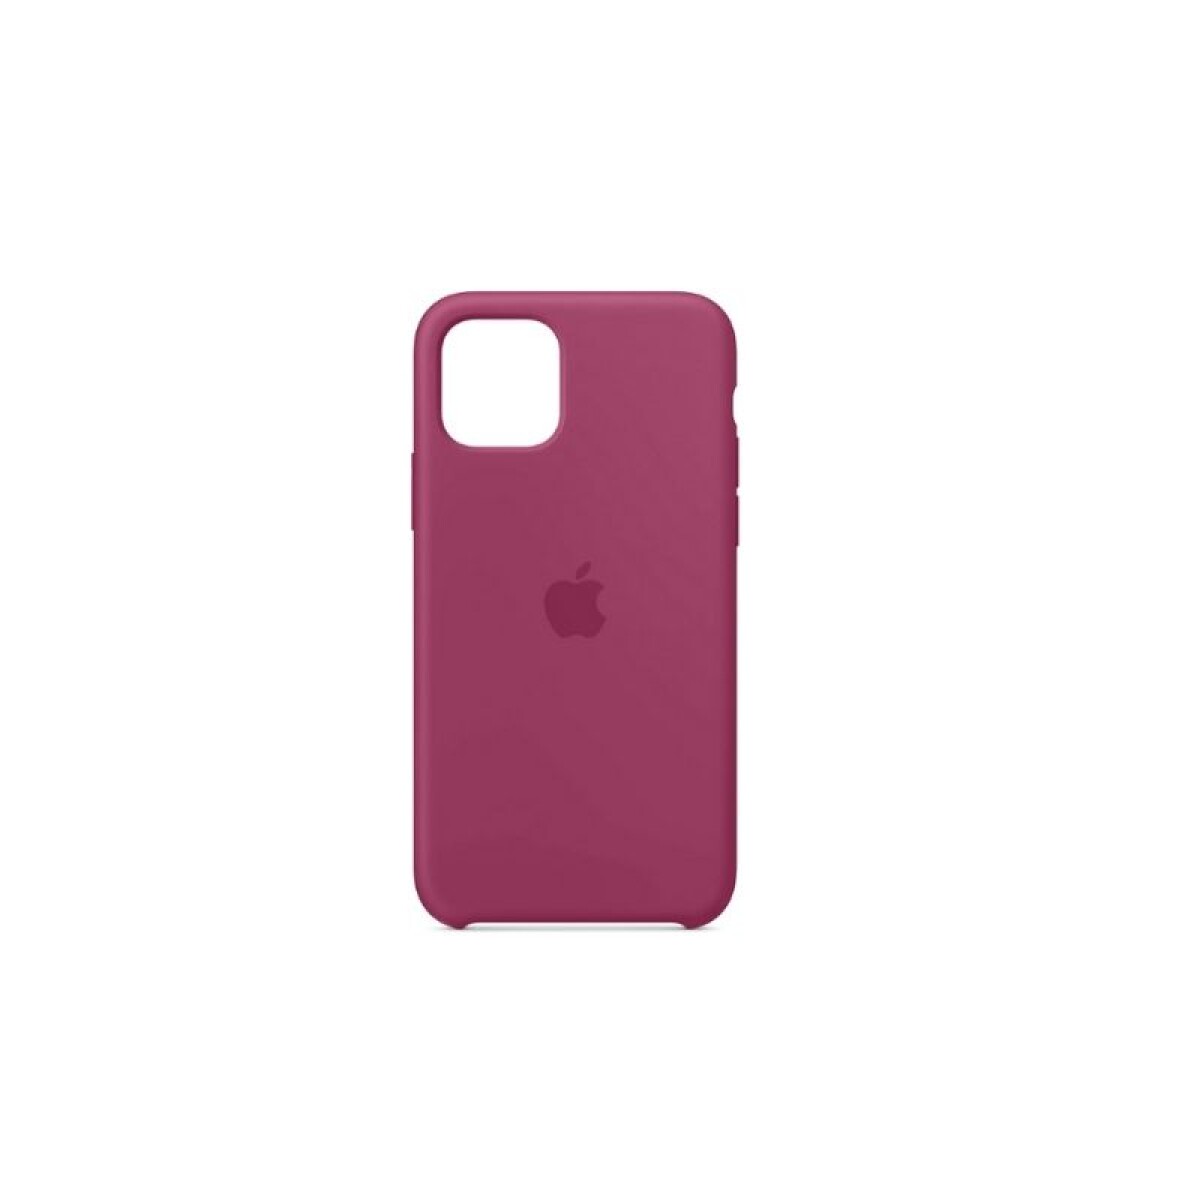 Protector original Apple para Iphone 11 Pro rosado 